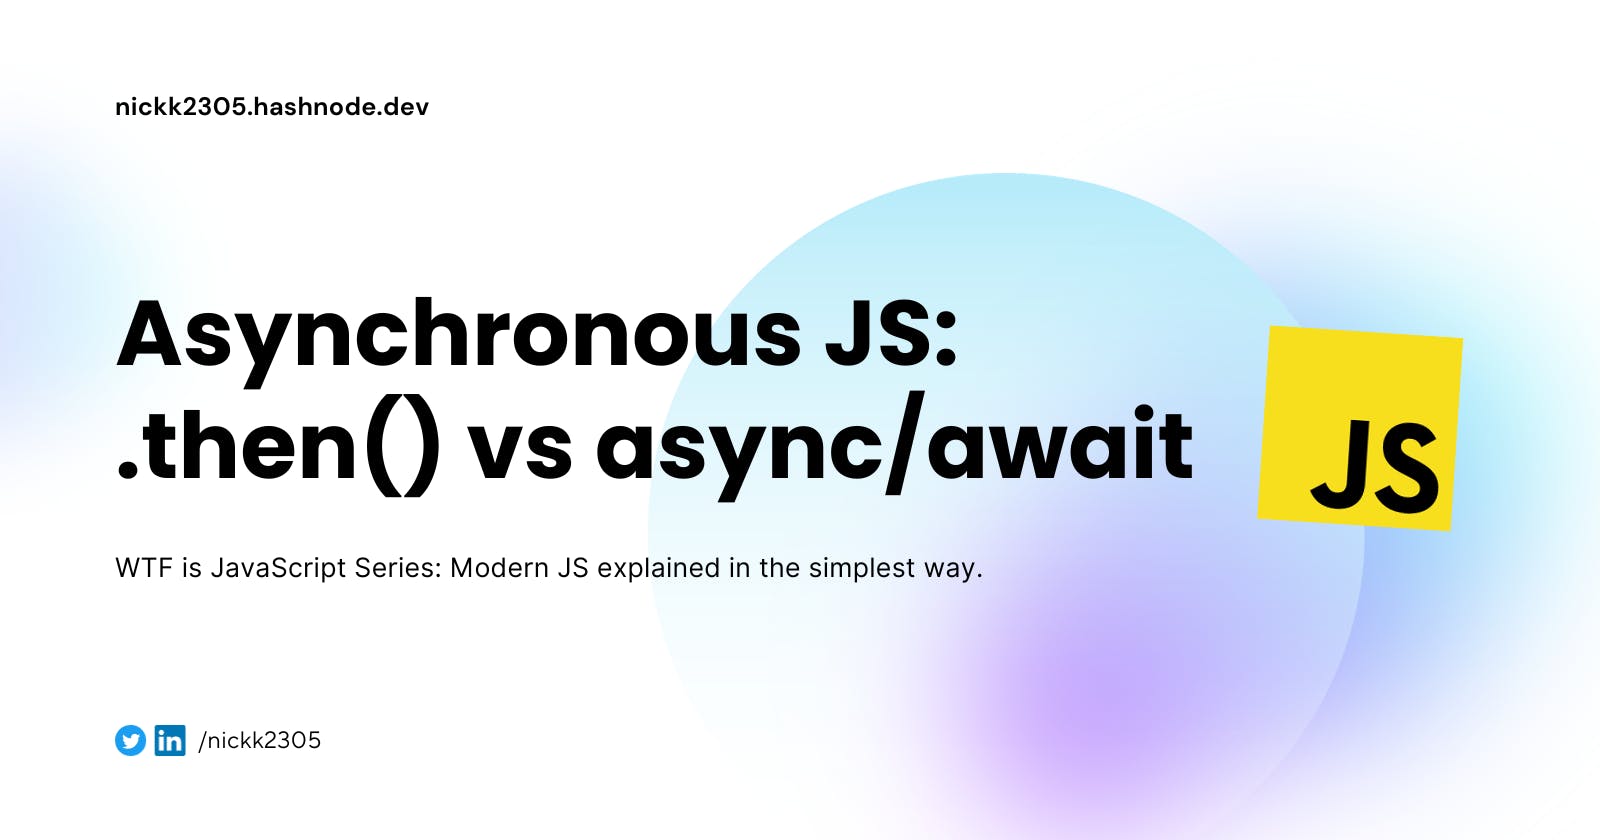 WTF is Asynchronous JavaScript: async/await vs .then()